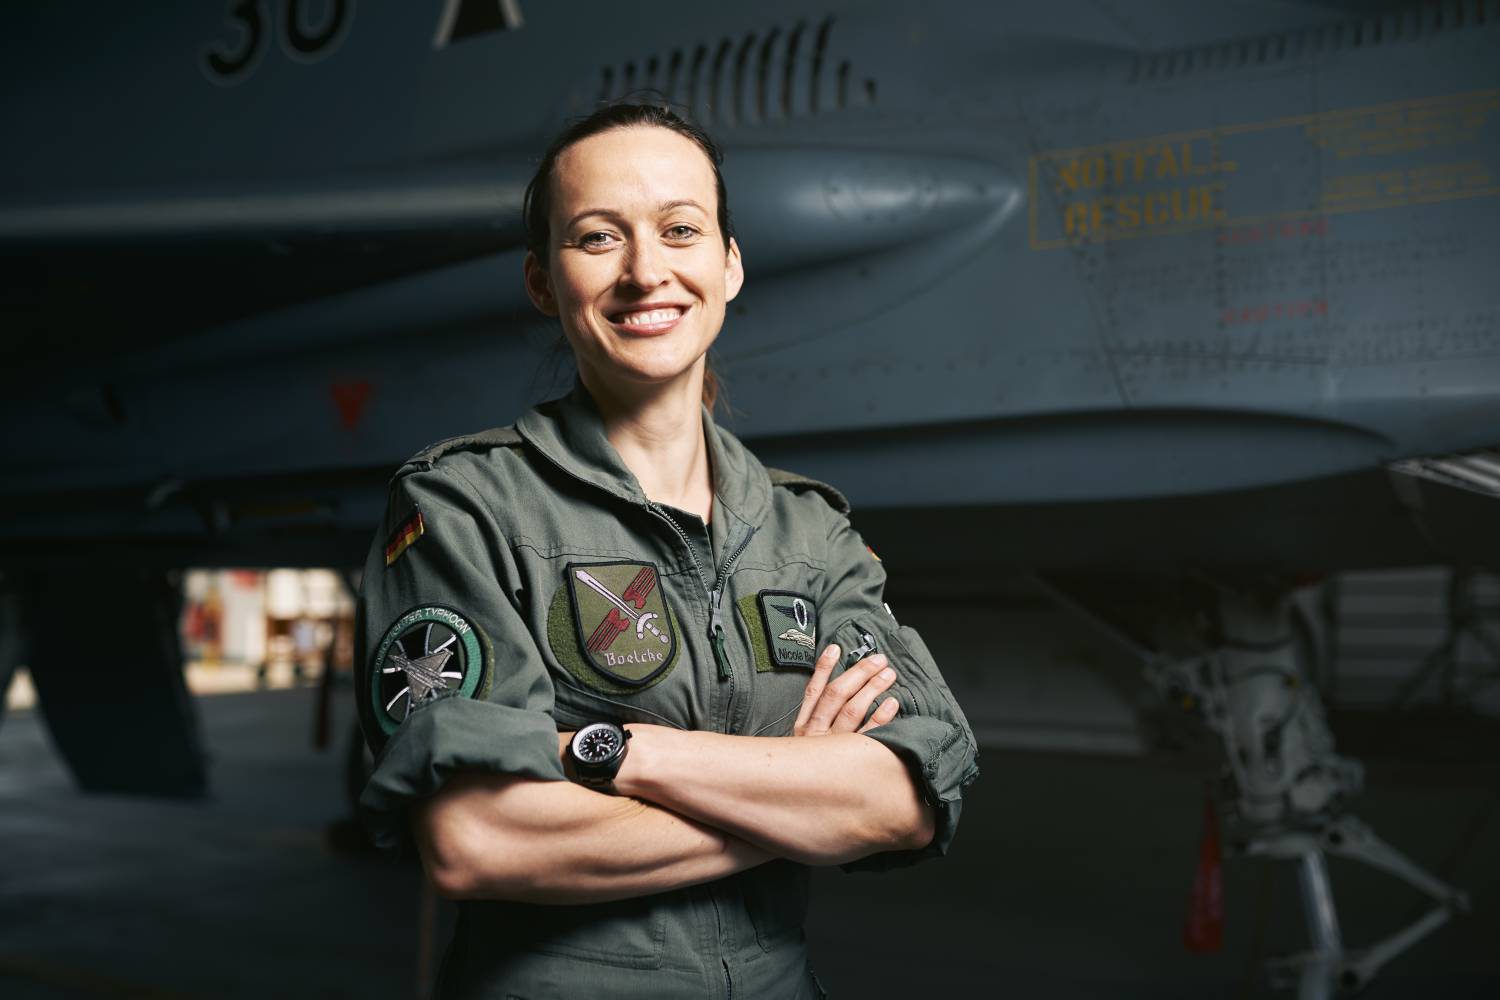 Nicola Winter, Eurofighter pilot, ESA reserve astronaut, emergency and crisis management expert.